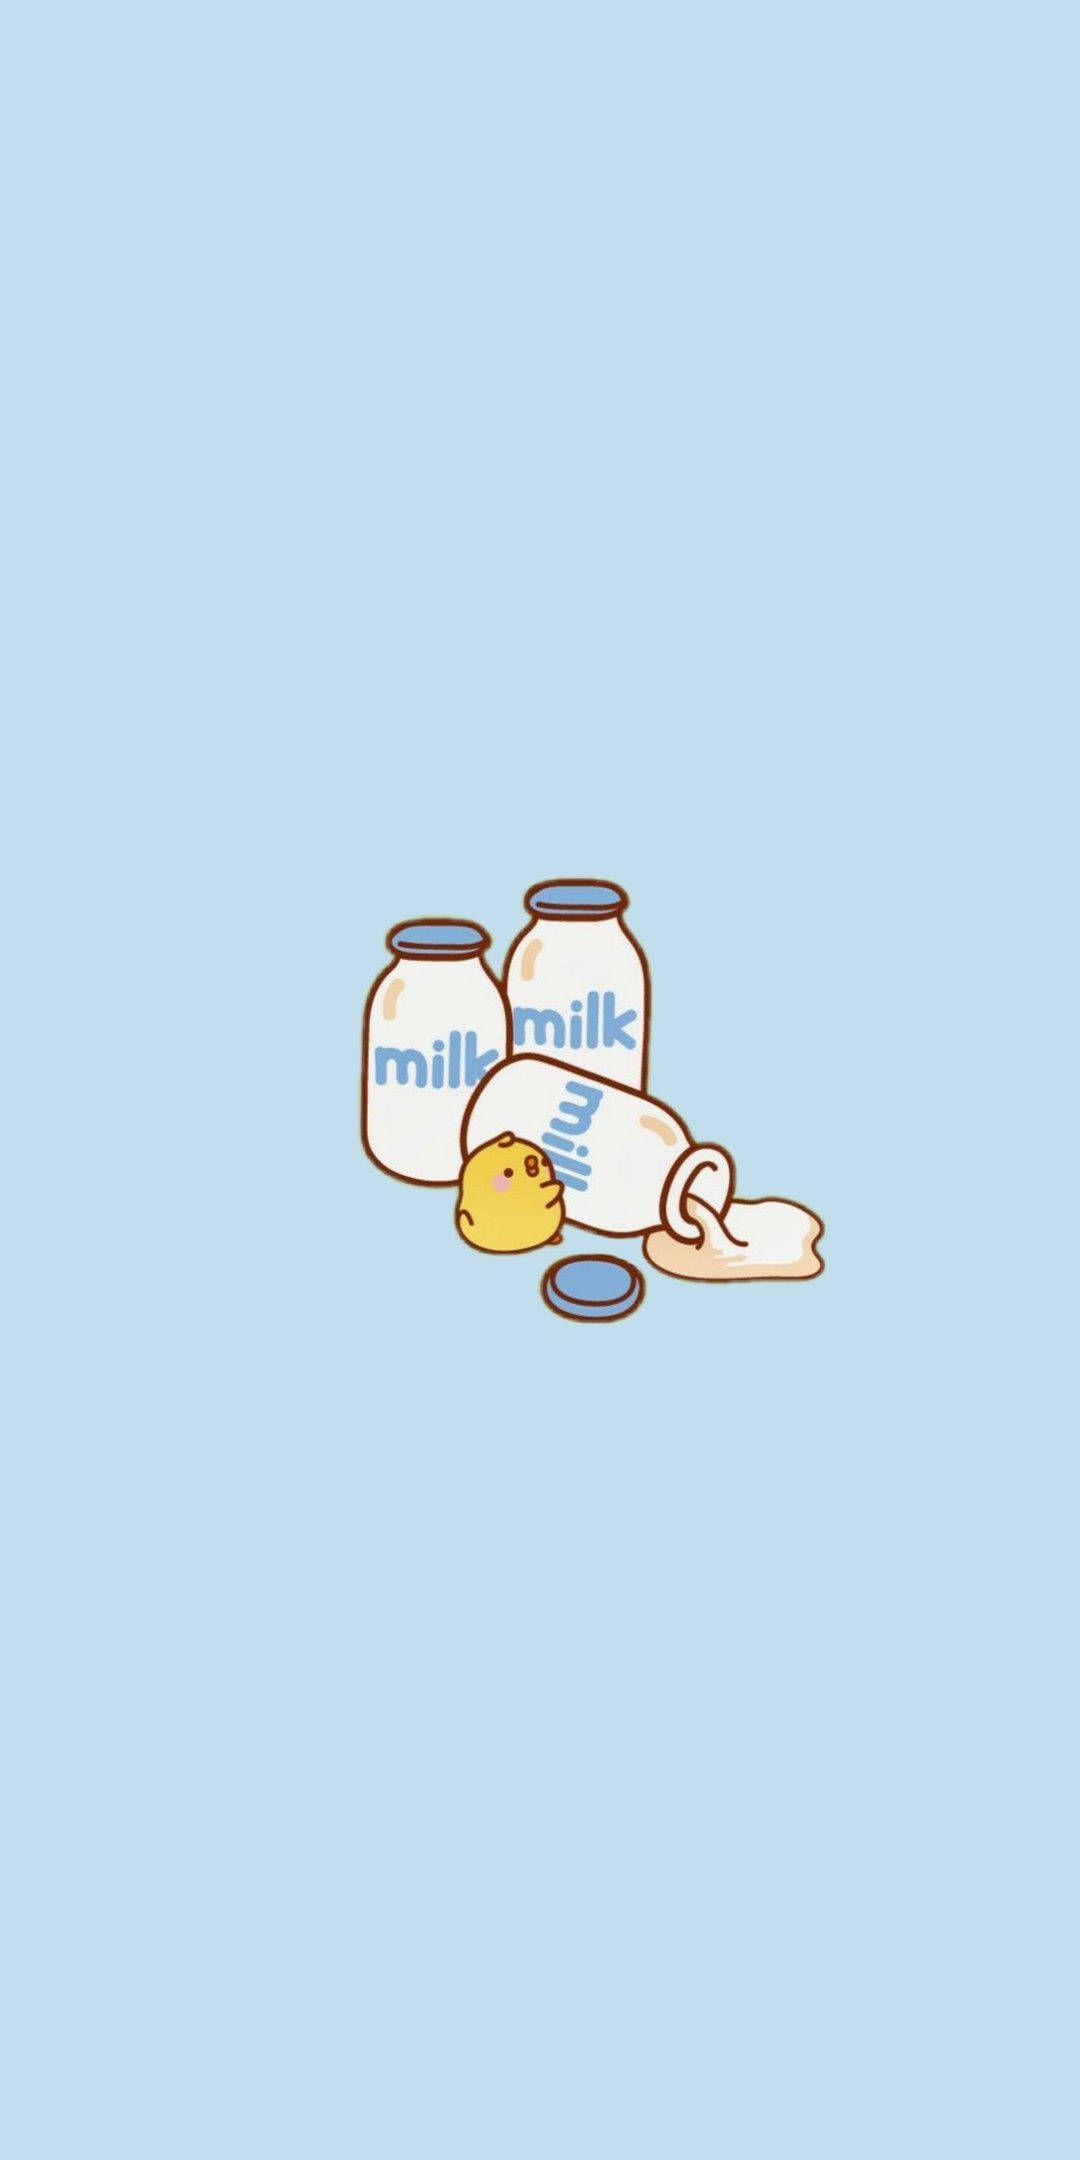 Download Aesthetic Blue Milk Bottles Minimalist Wallpaper